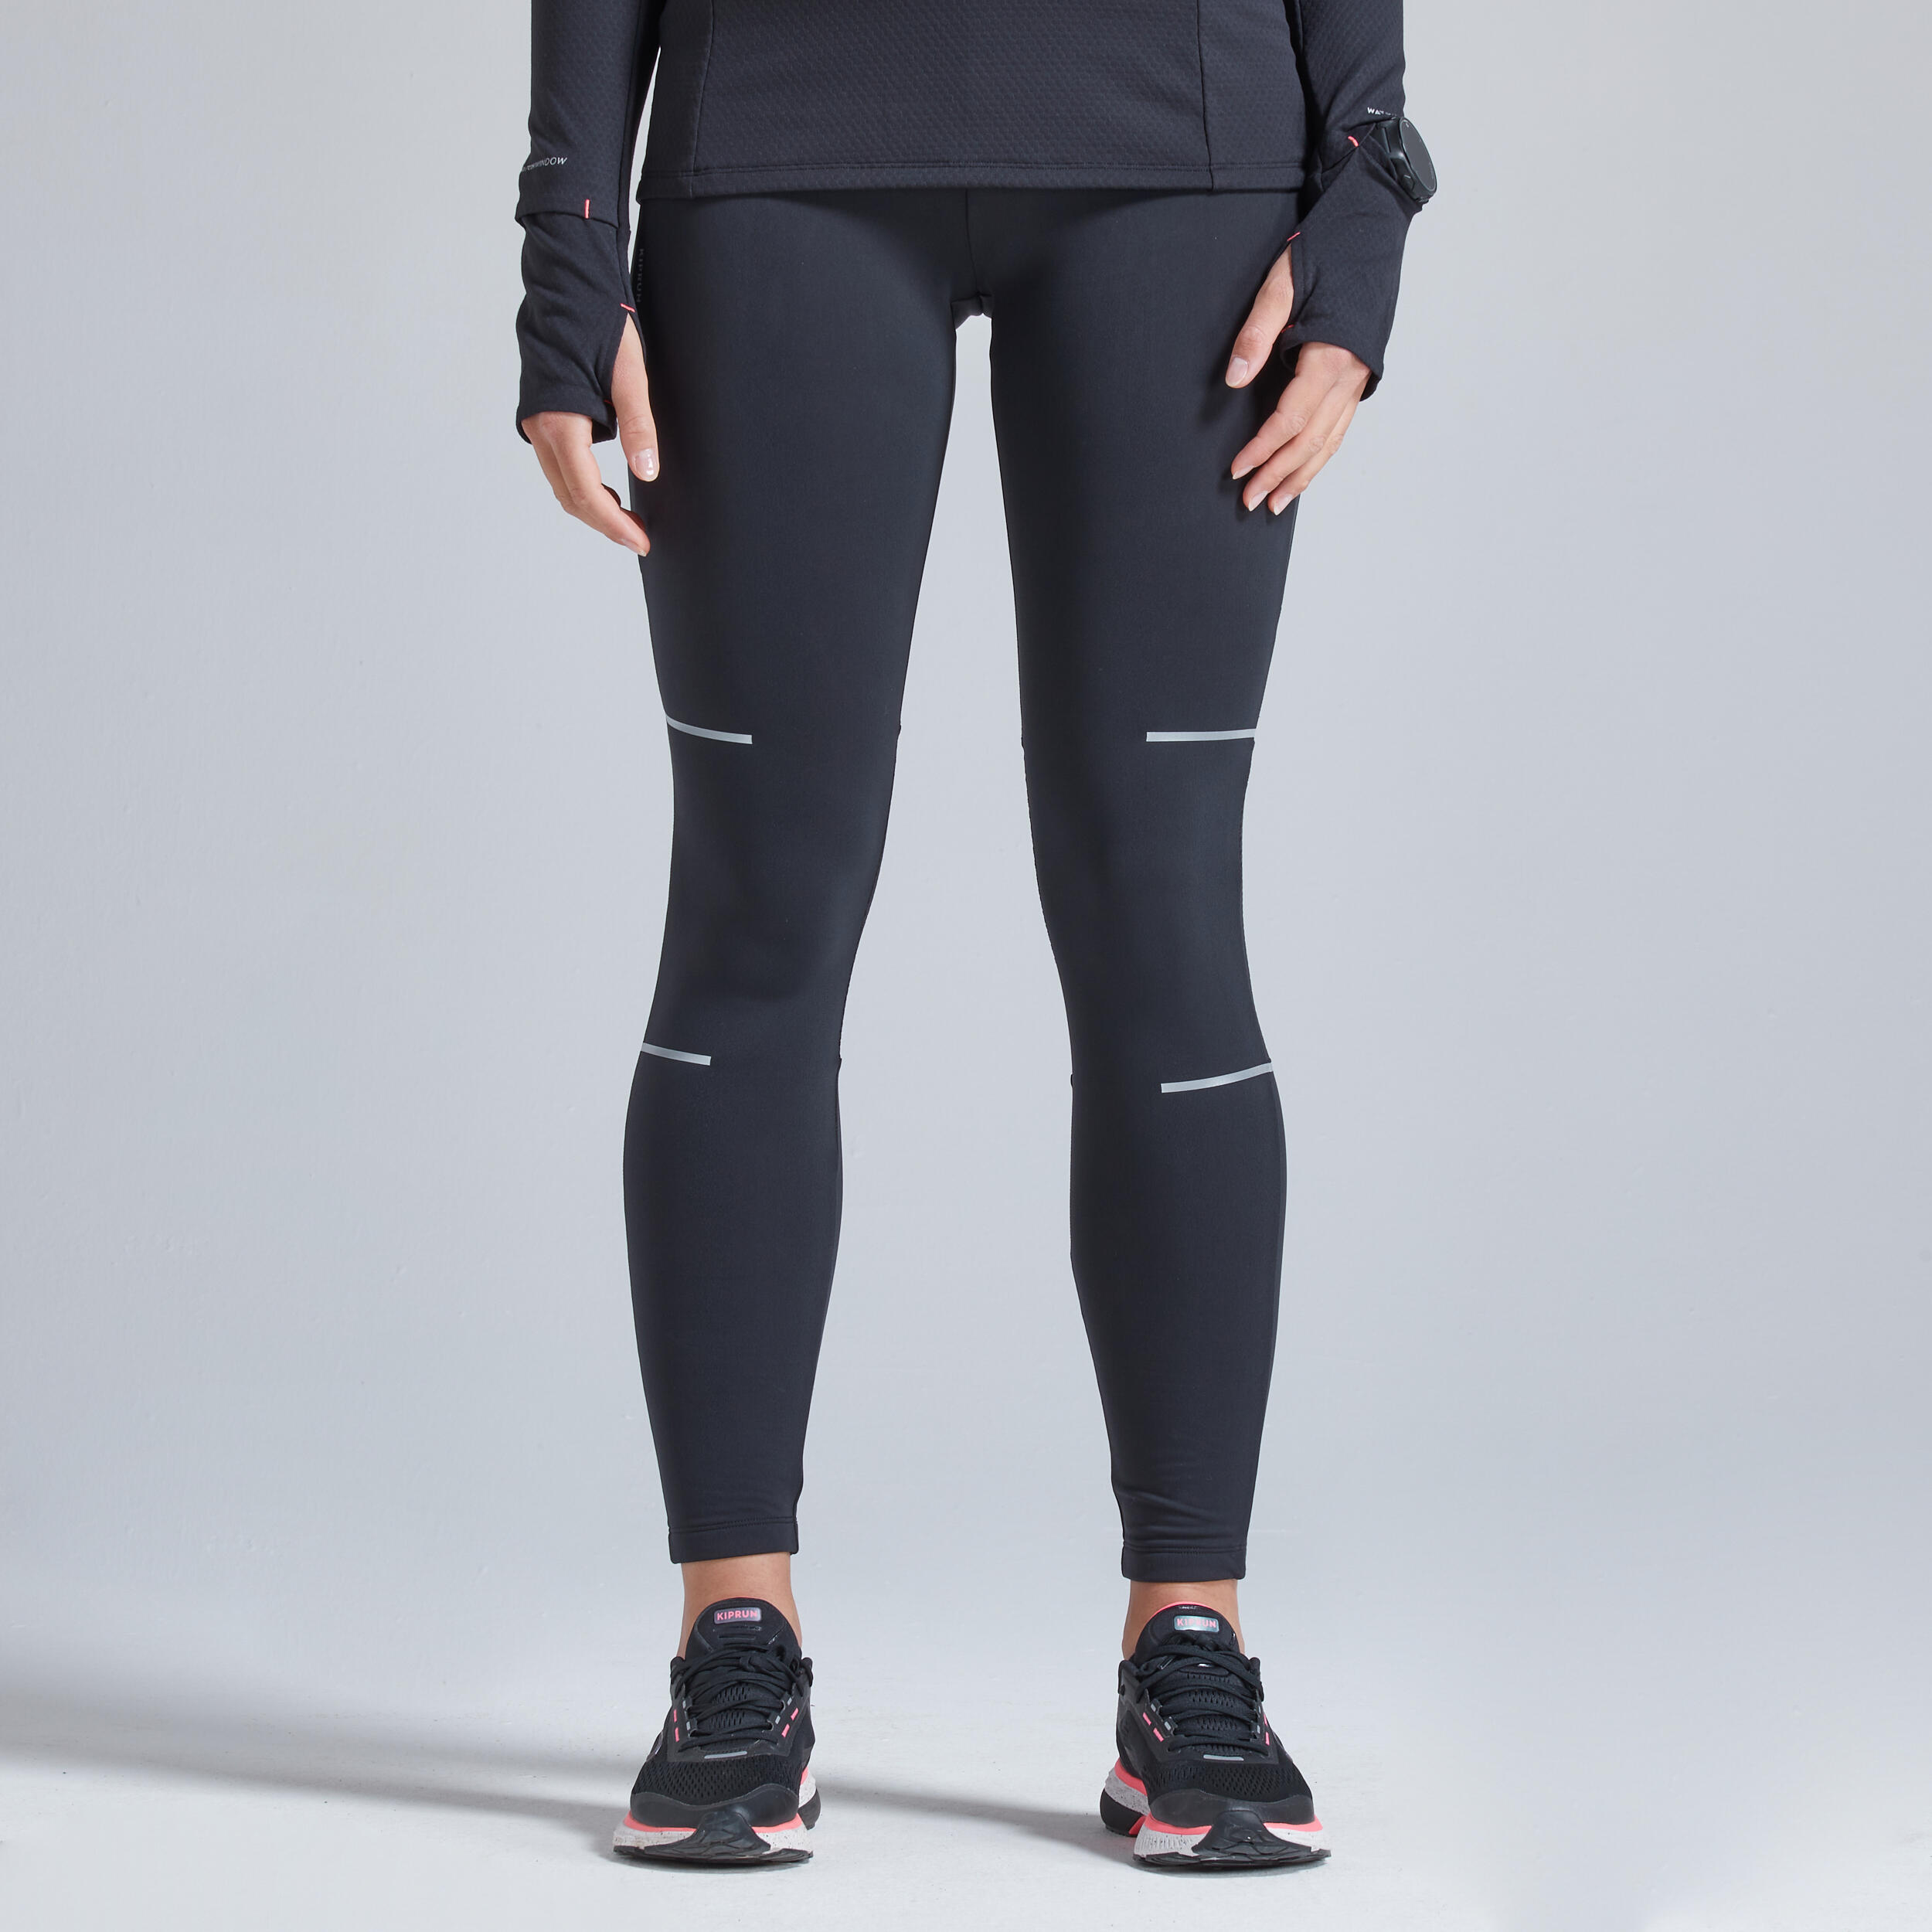 Jockey 2541 Womens Acrylic Blend Thermal Legging With Stay Warm Technology  - Black